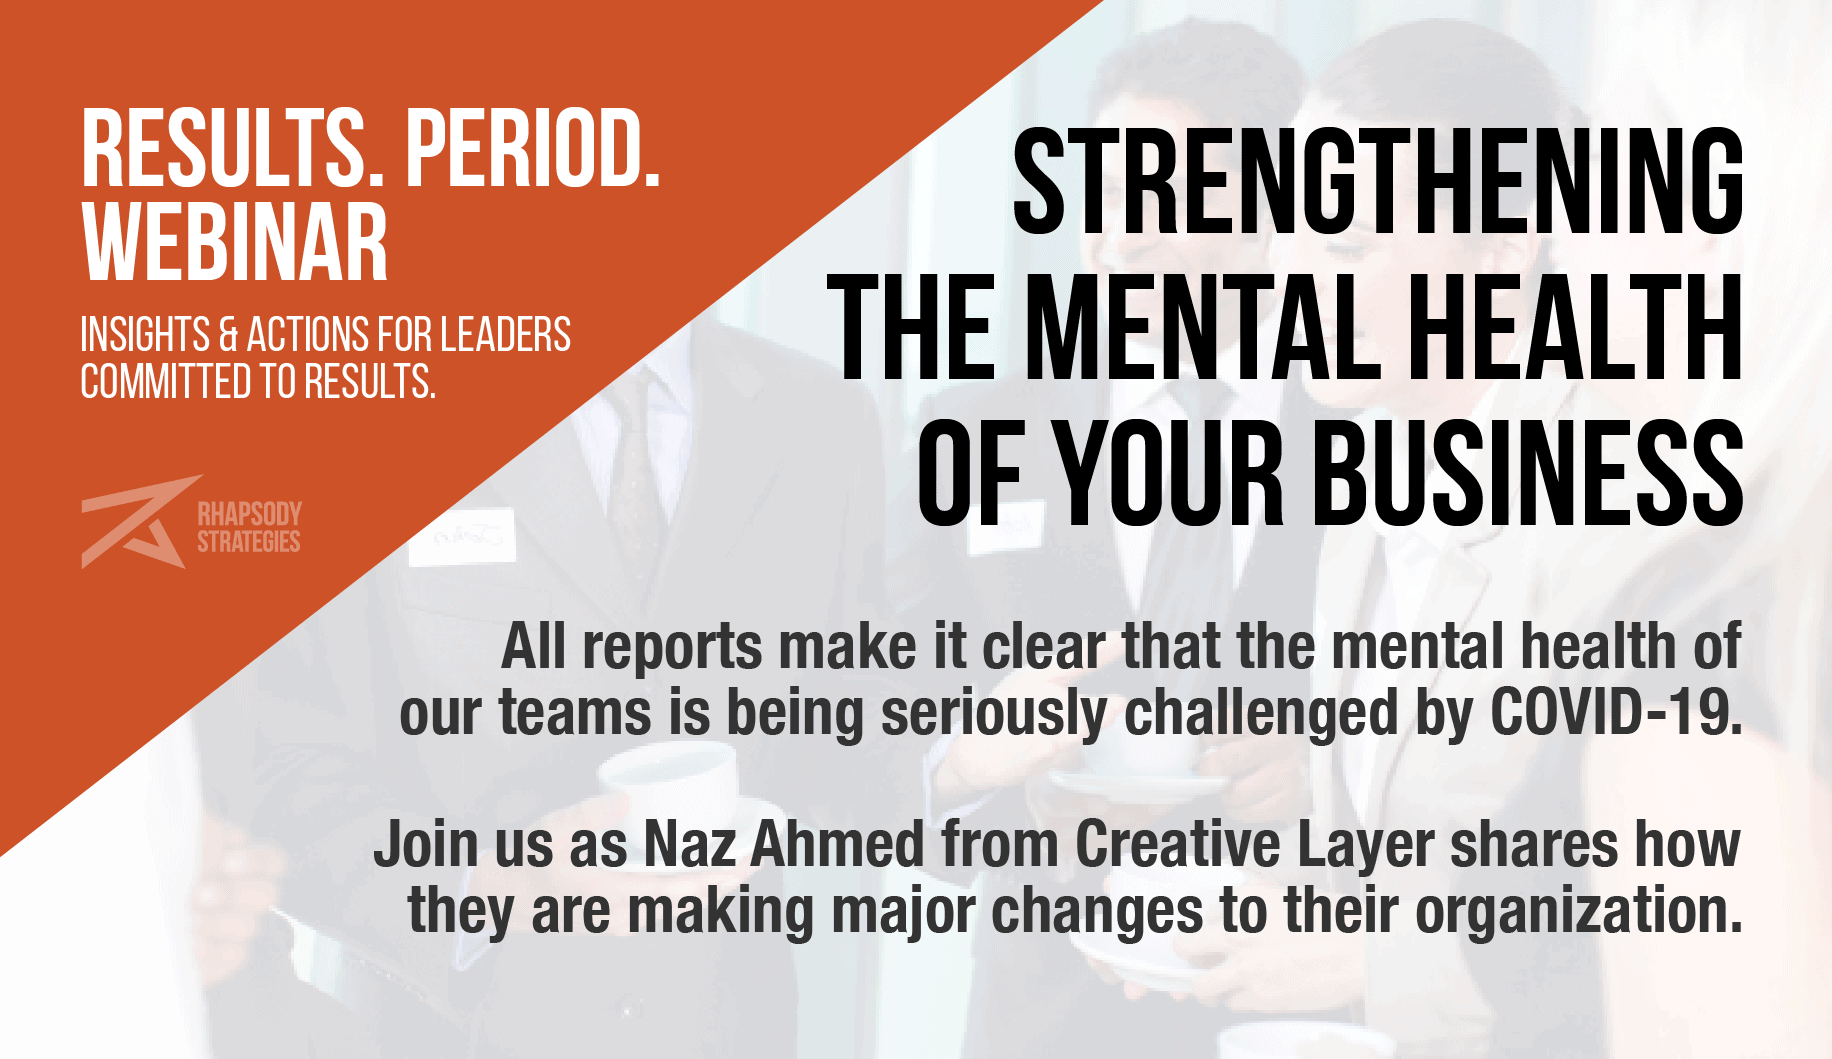 mental health, creative layer, naz ahmed, nazim ahmed, Rhapsody Strategies, Business Coach, Business Coaching